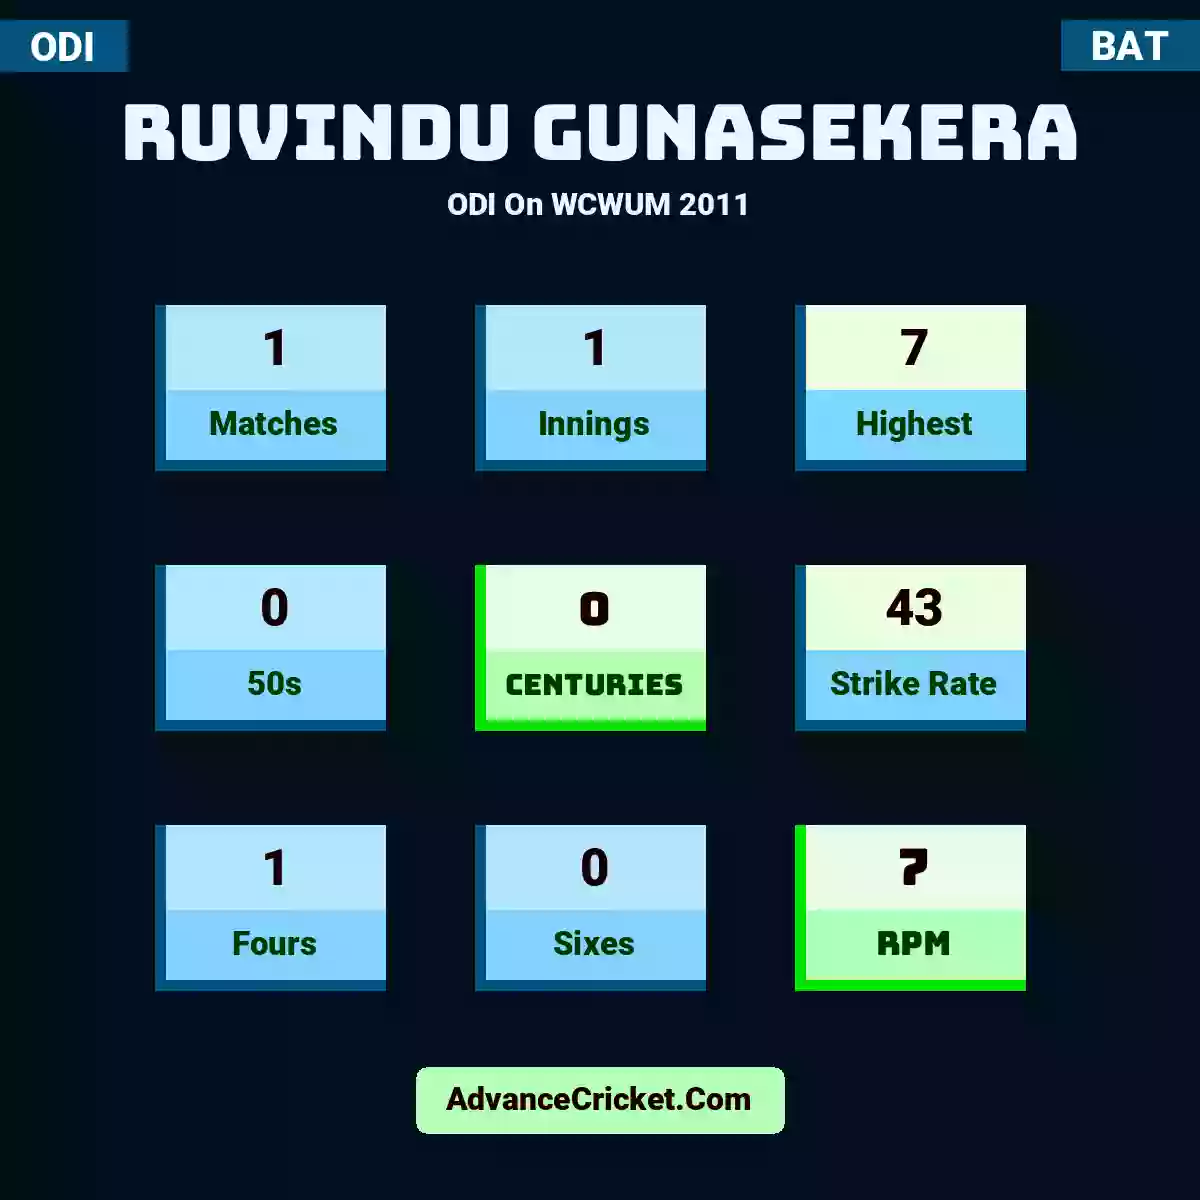 Ruvindu Gunasekera ODI  On WCWUM 2011, Ruvindu Gunasekera played 1 matches, scored 7 runs as highest, 0 half-centuries, and 0 centuries, with a strike rate of 43. R.Gunasekera hit 1 fours and 0 sixes, with an RPM of 7.